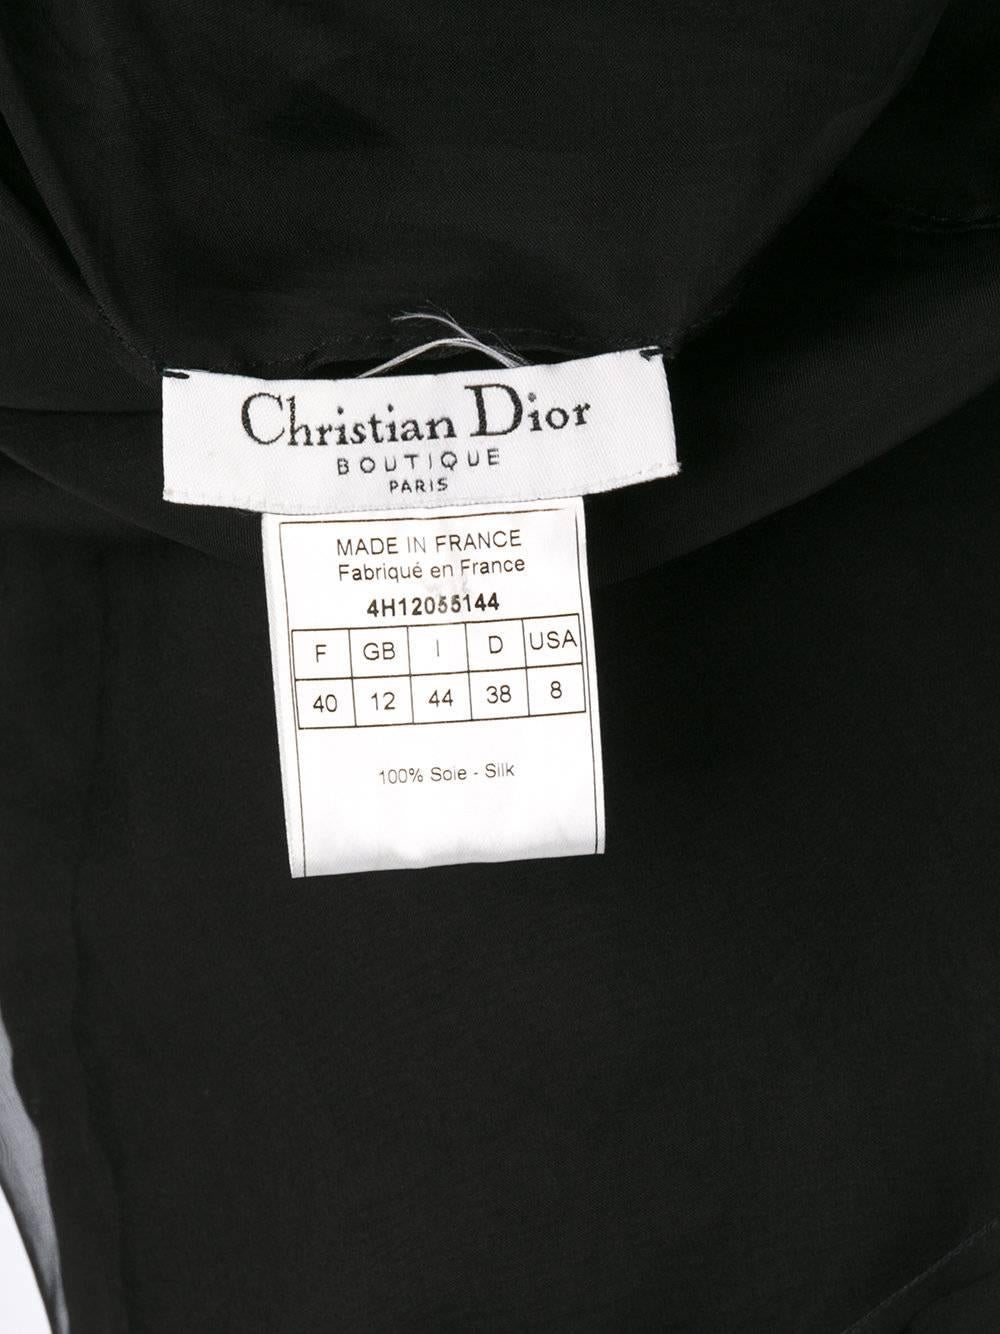 Circa 2004 CHRISTIAN DIOR by John Galliano black silk bow sheer blouse unworn For Sale 3